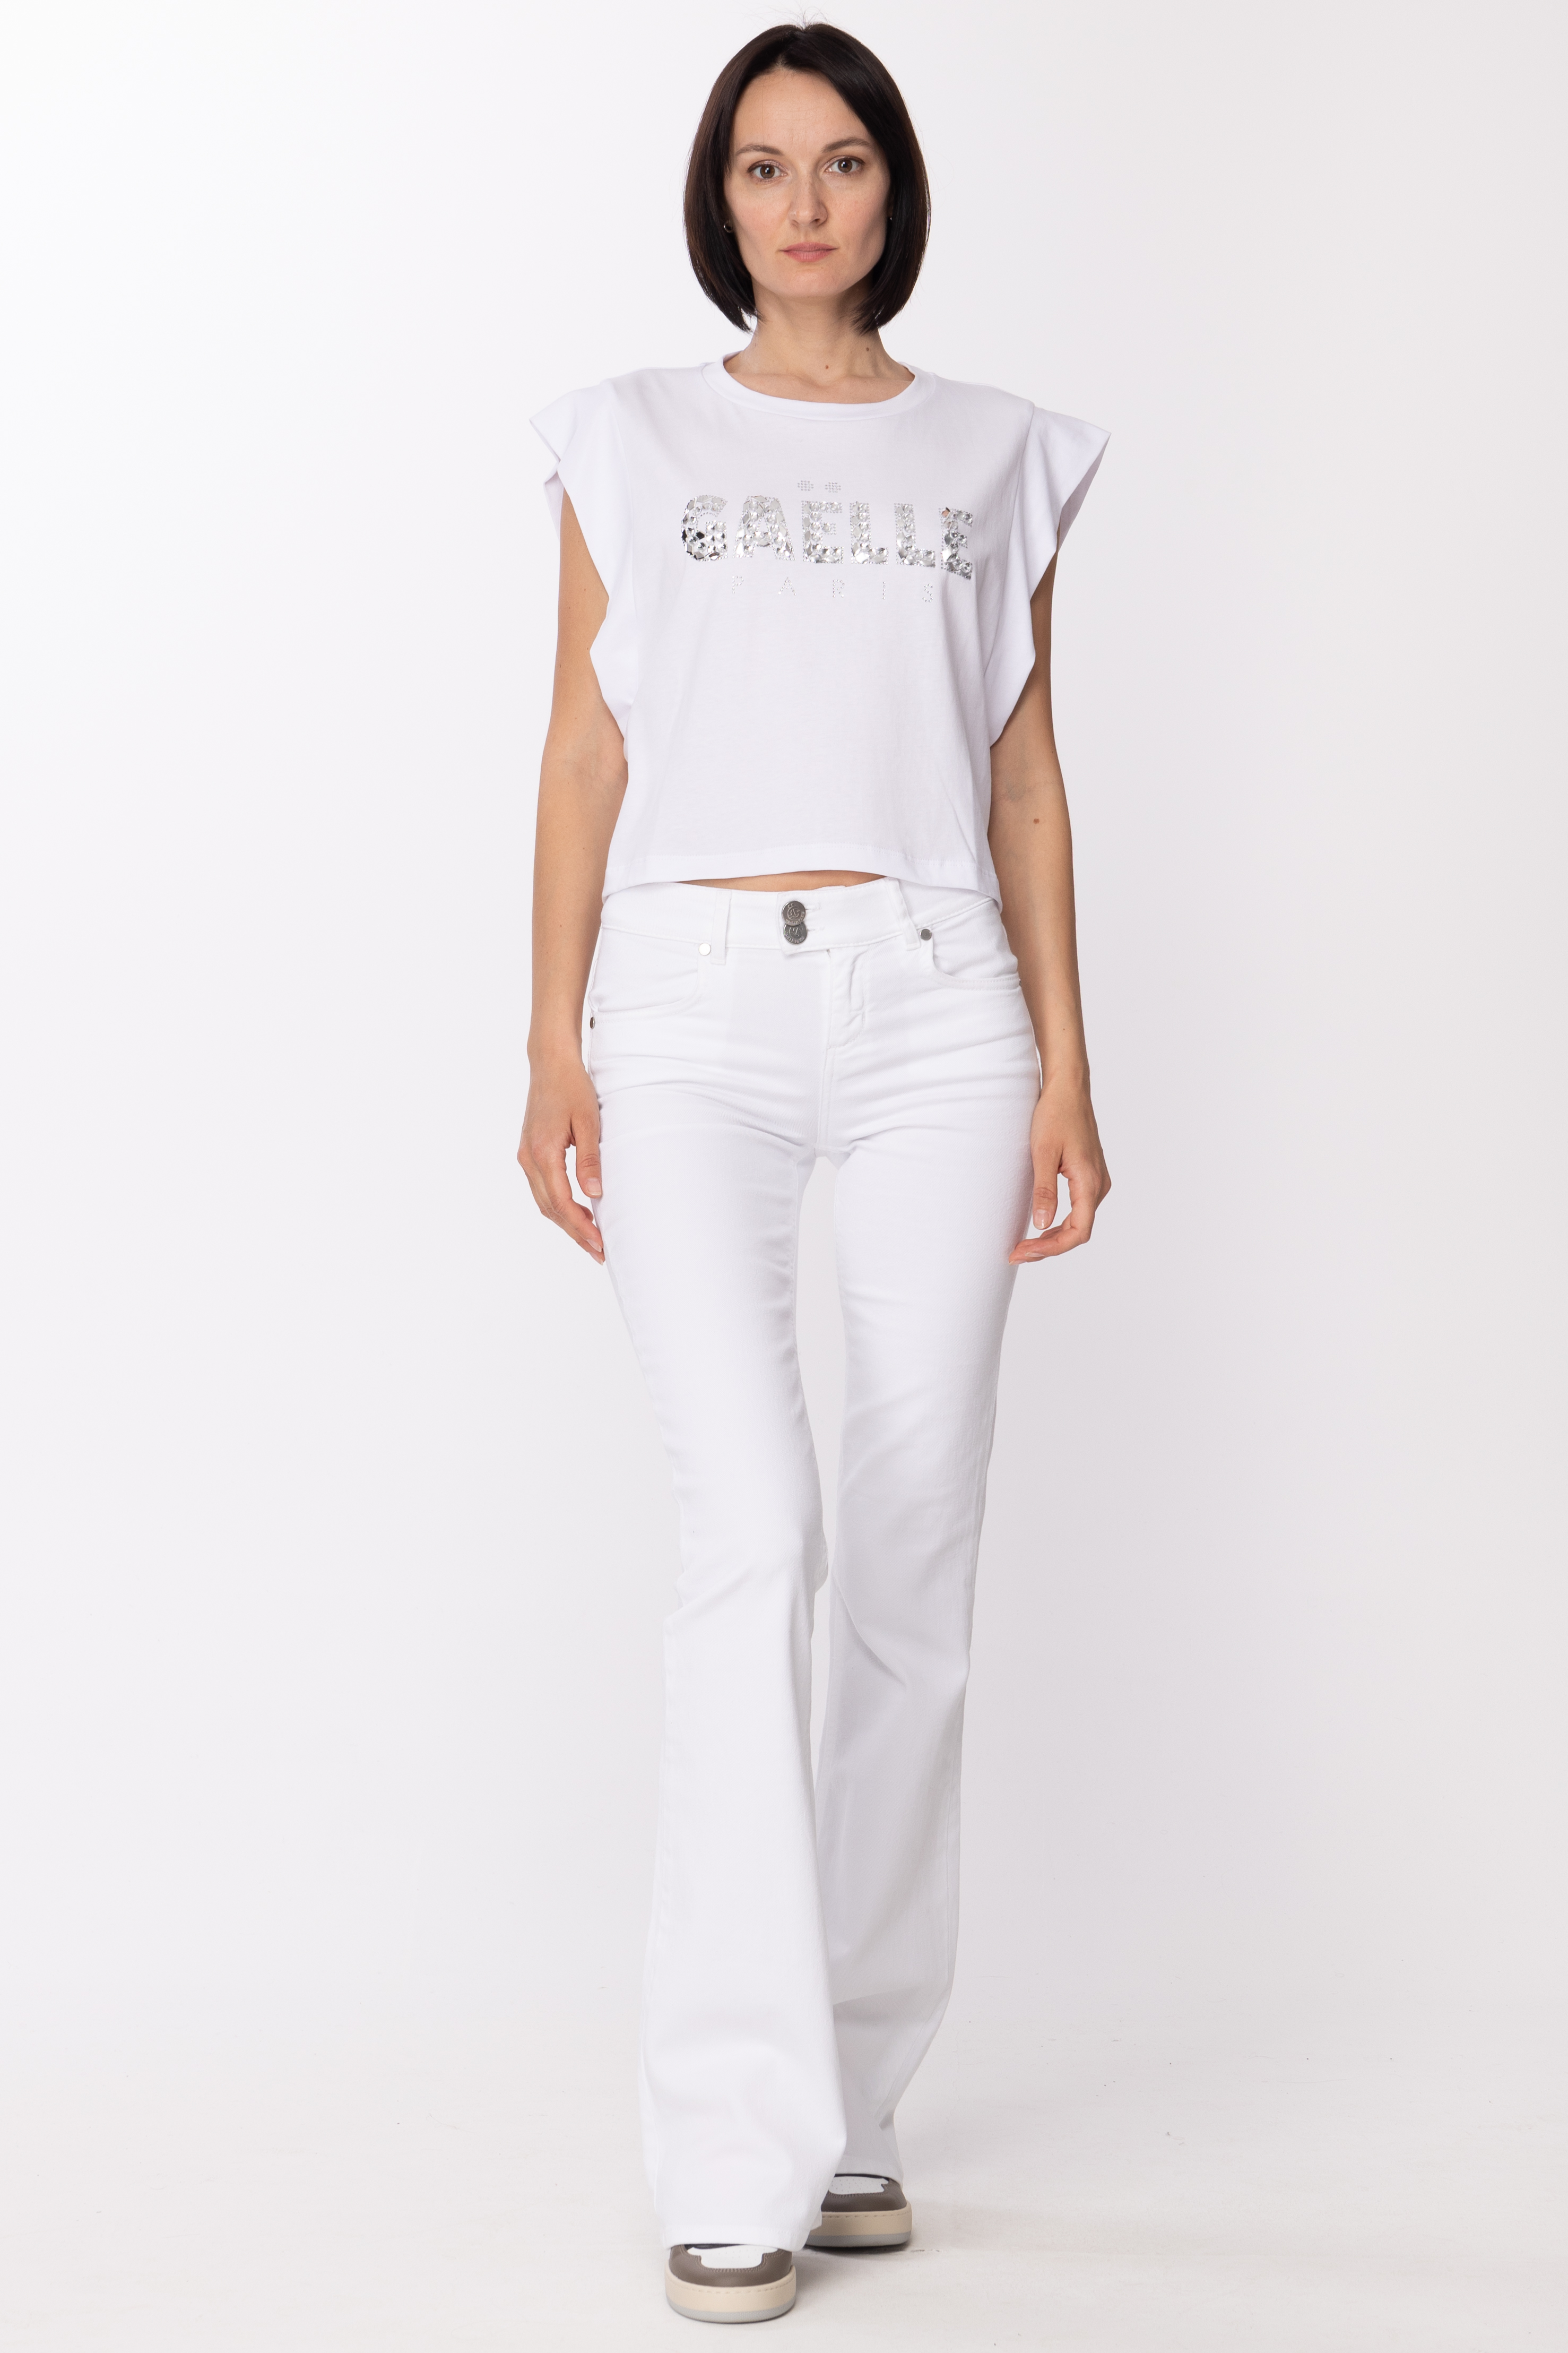 Aperçu: Gaelle Paris T-shirt avec logo en strass Bianco